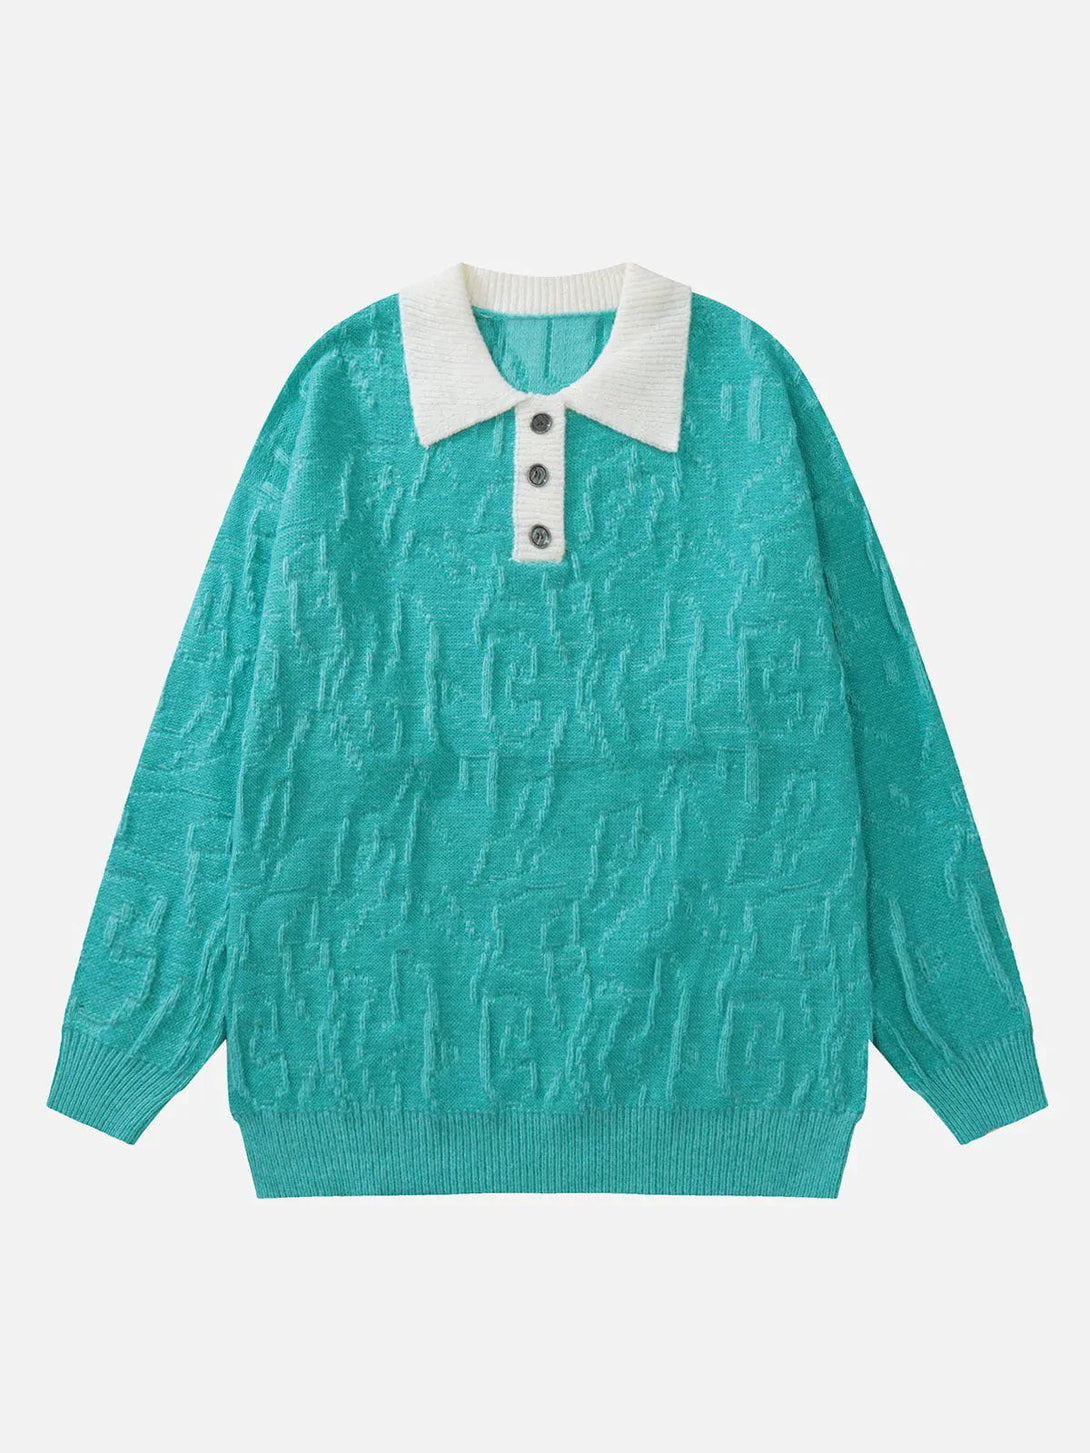 Majesda® - Vintage Contrast Knit Polo Sweater outfit ideas streetwear fashion